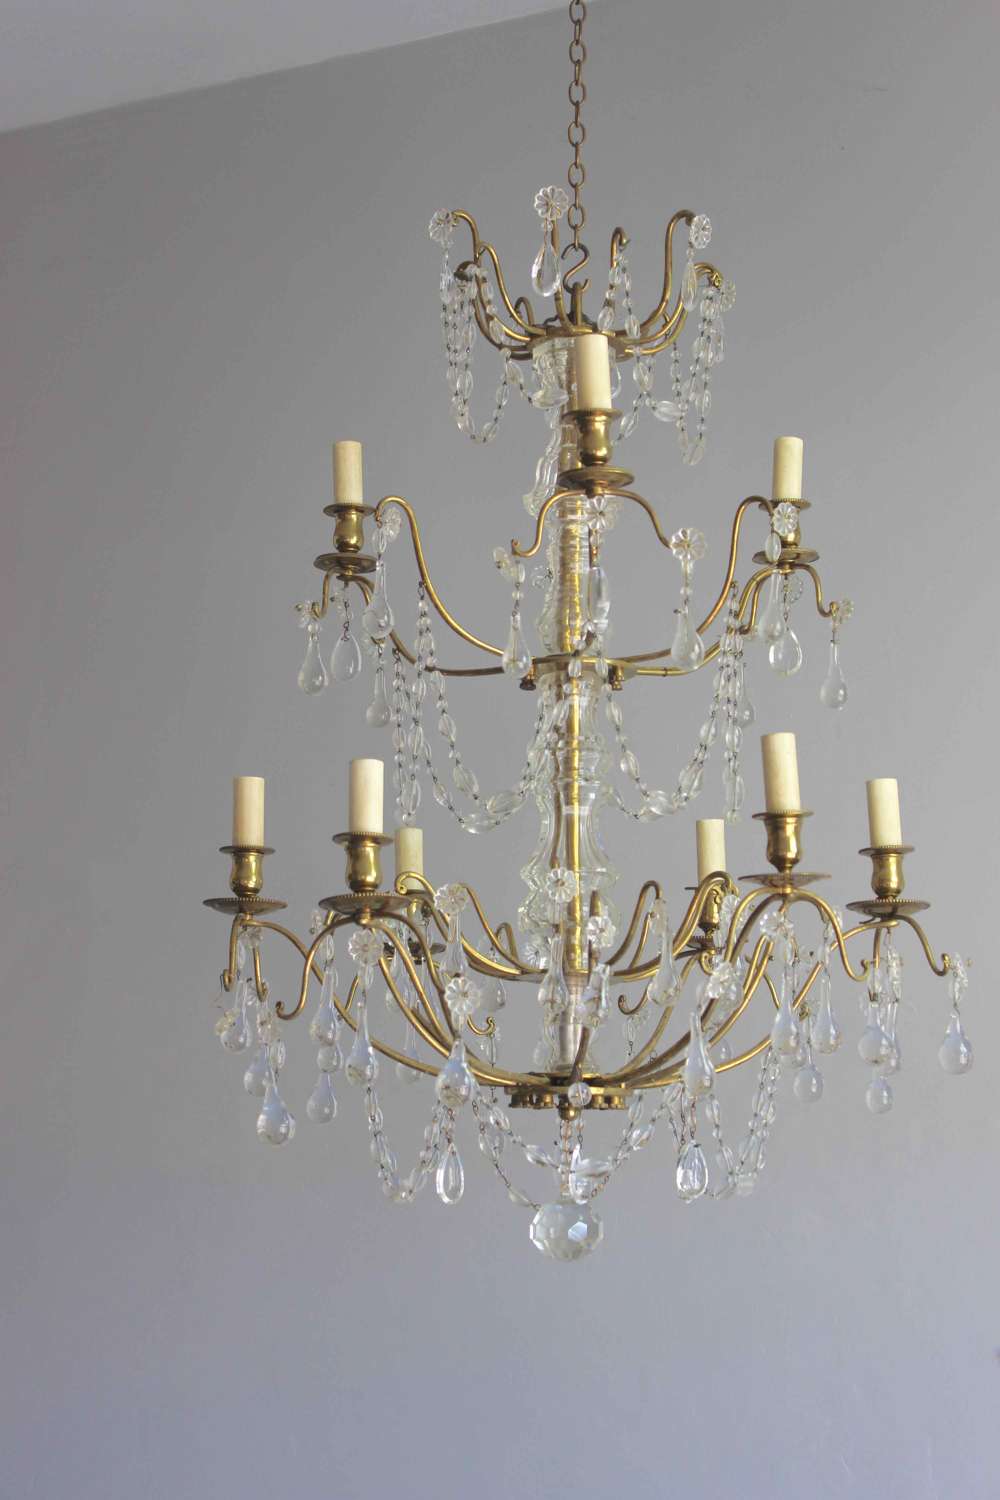 https://www.antiquelighting.co.uk/upload/images/shopprod/14284/traditional-gilded-brass-framed-cut-glass-two-tier-antique-chandelier_14284_main_size3.jpg